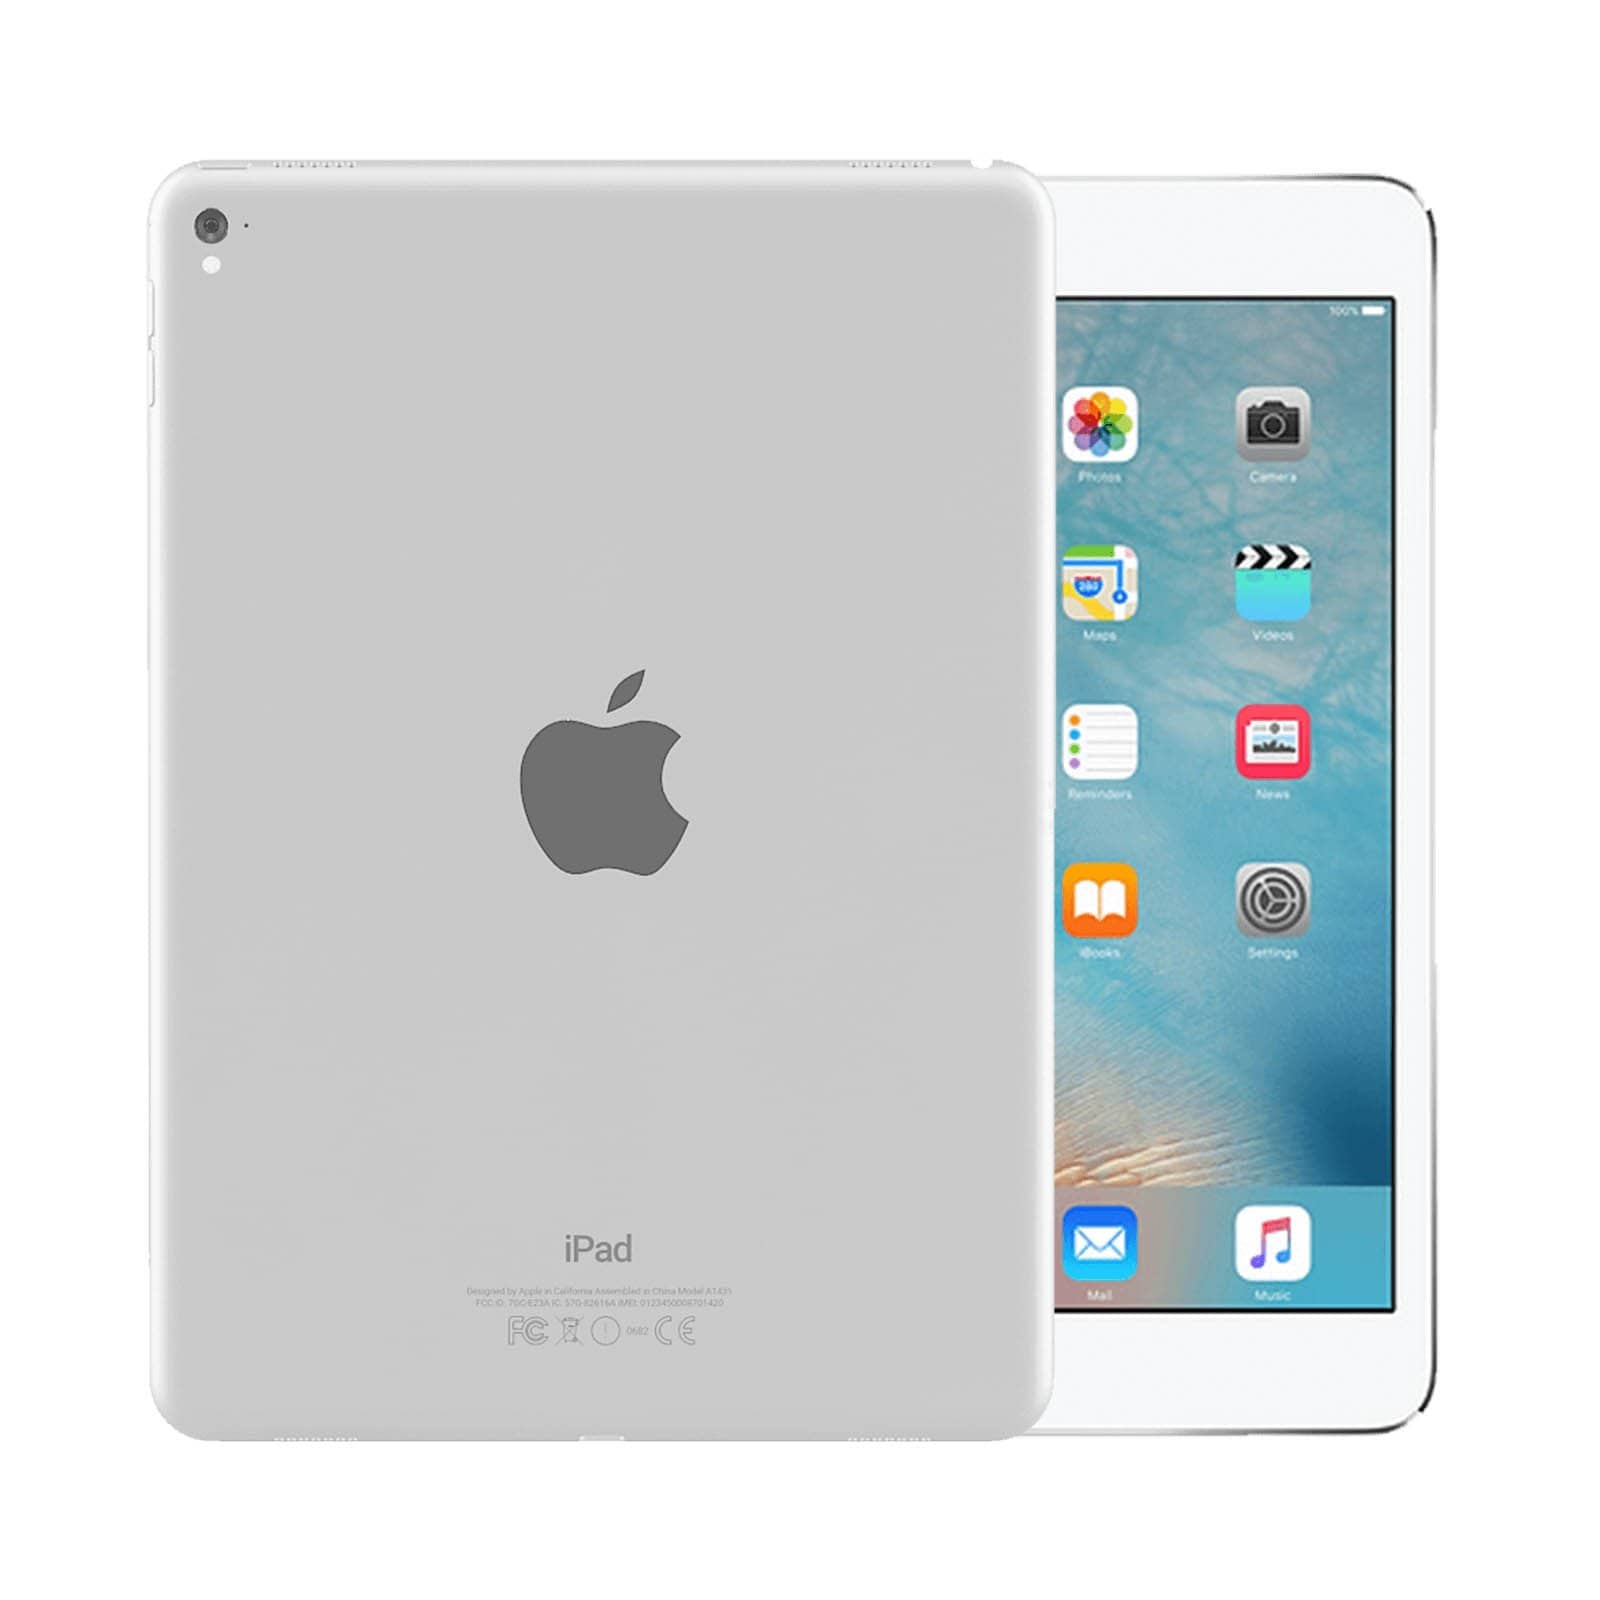 iPad Pro 9.7 Inch 32GB Silver Good - WiFi 32GB Silver Good